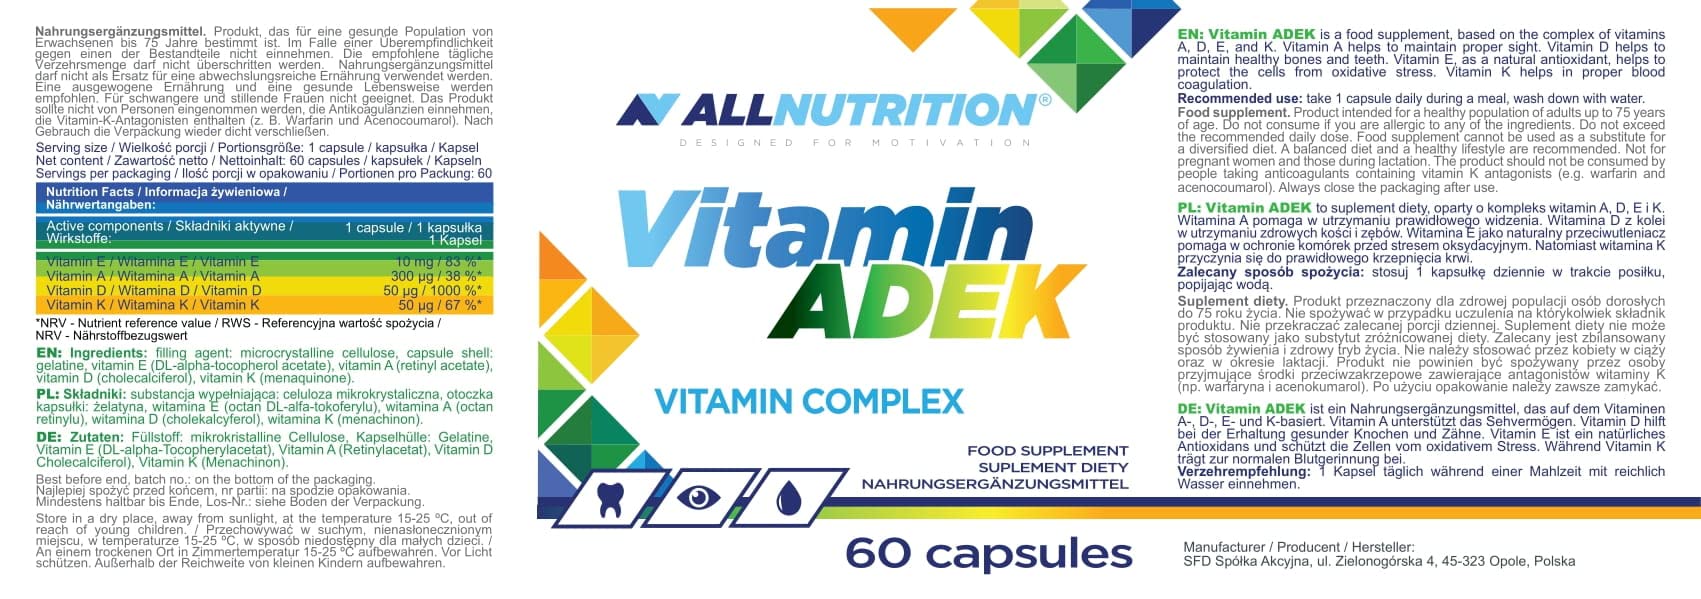 Allnutrition Vitamin ADEK - 60 caps | High-Quality Combination Multivitamins & Minerals | MySupplementShop.co.uk